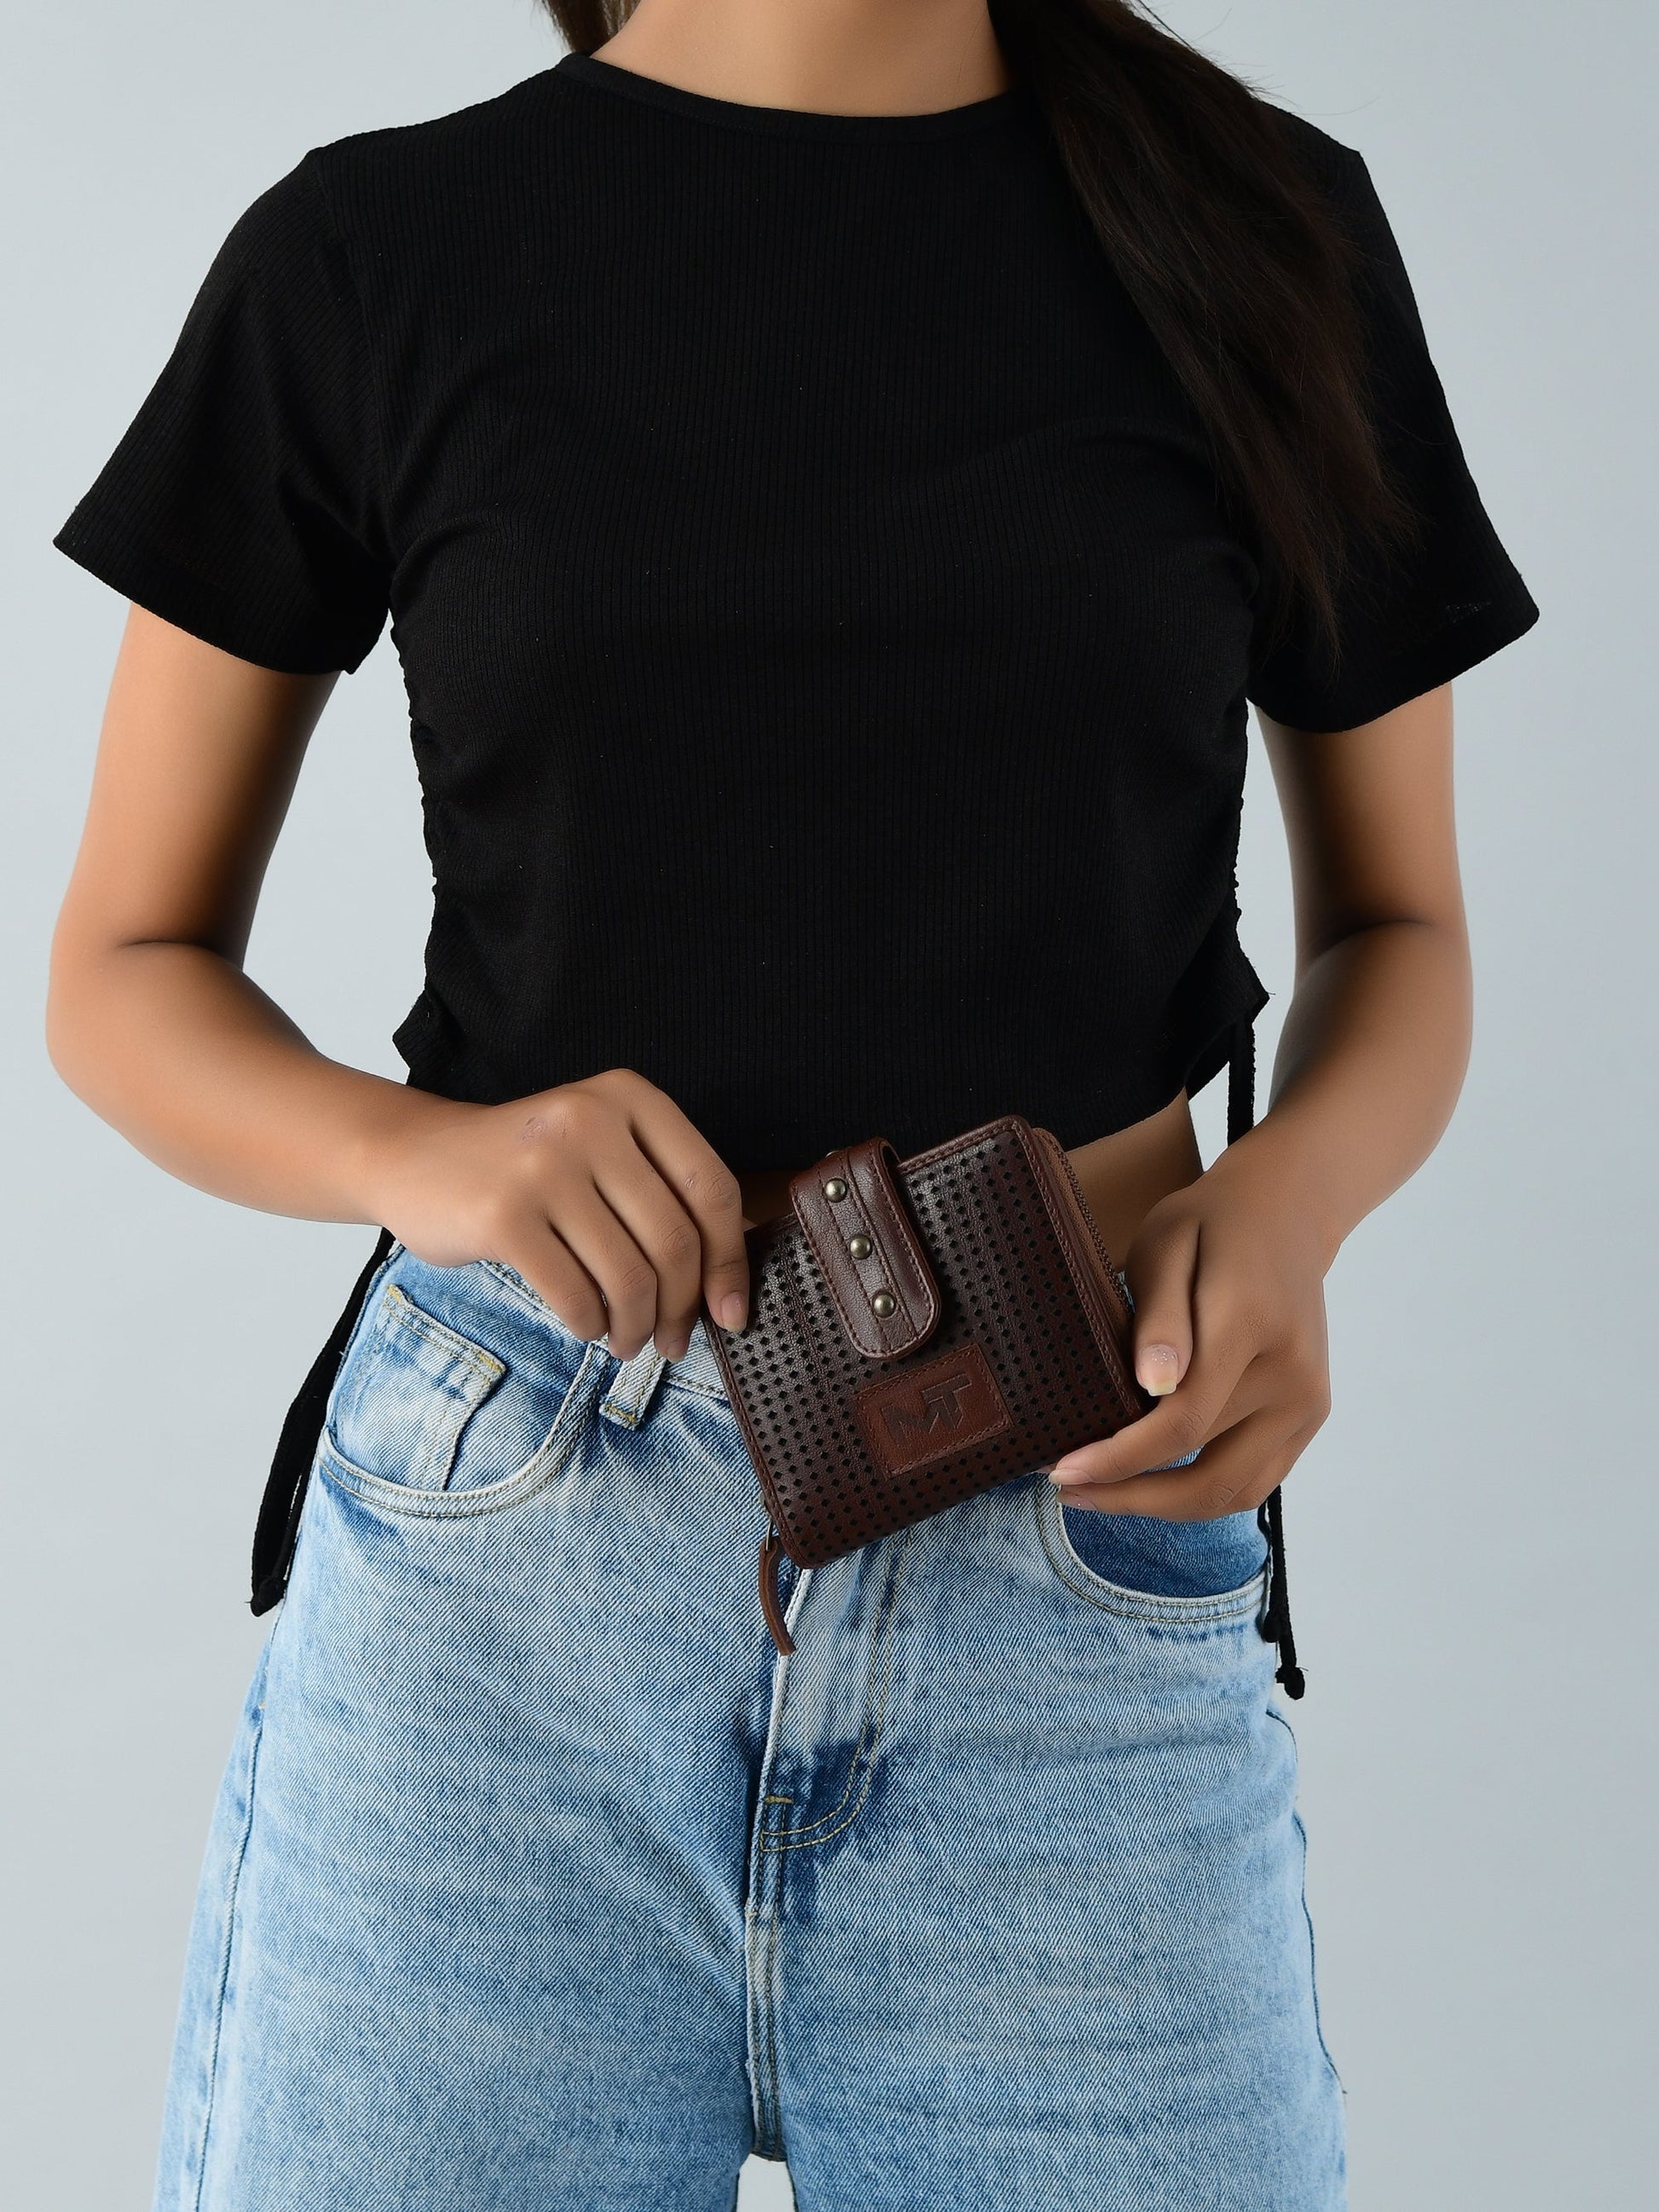 Textured Women's Bifold Wallet- Dark Brown - The Tool Store